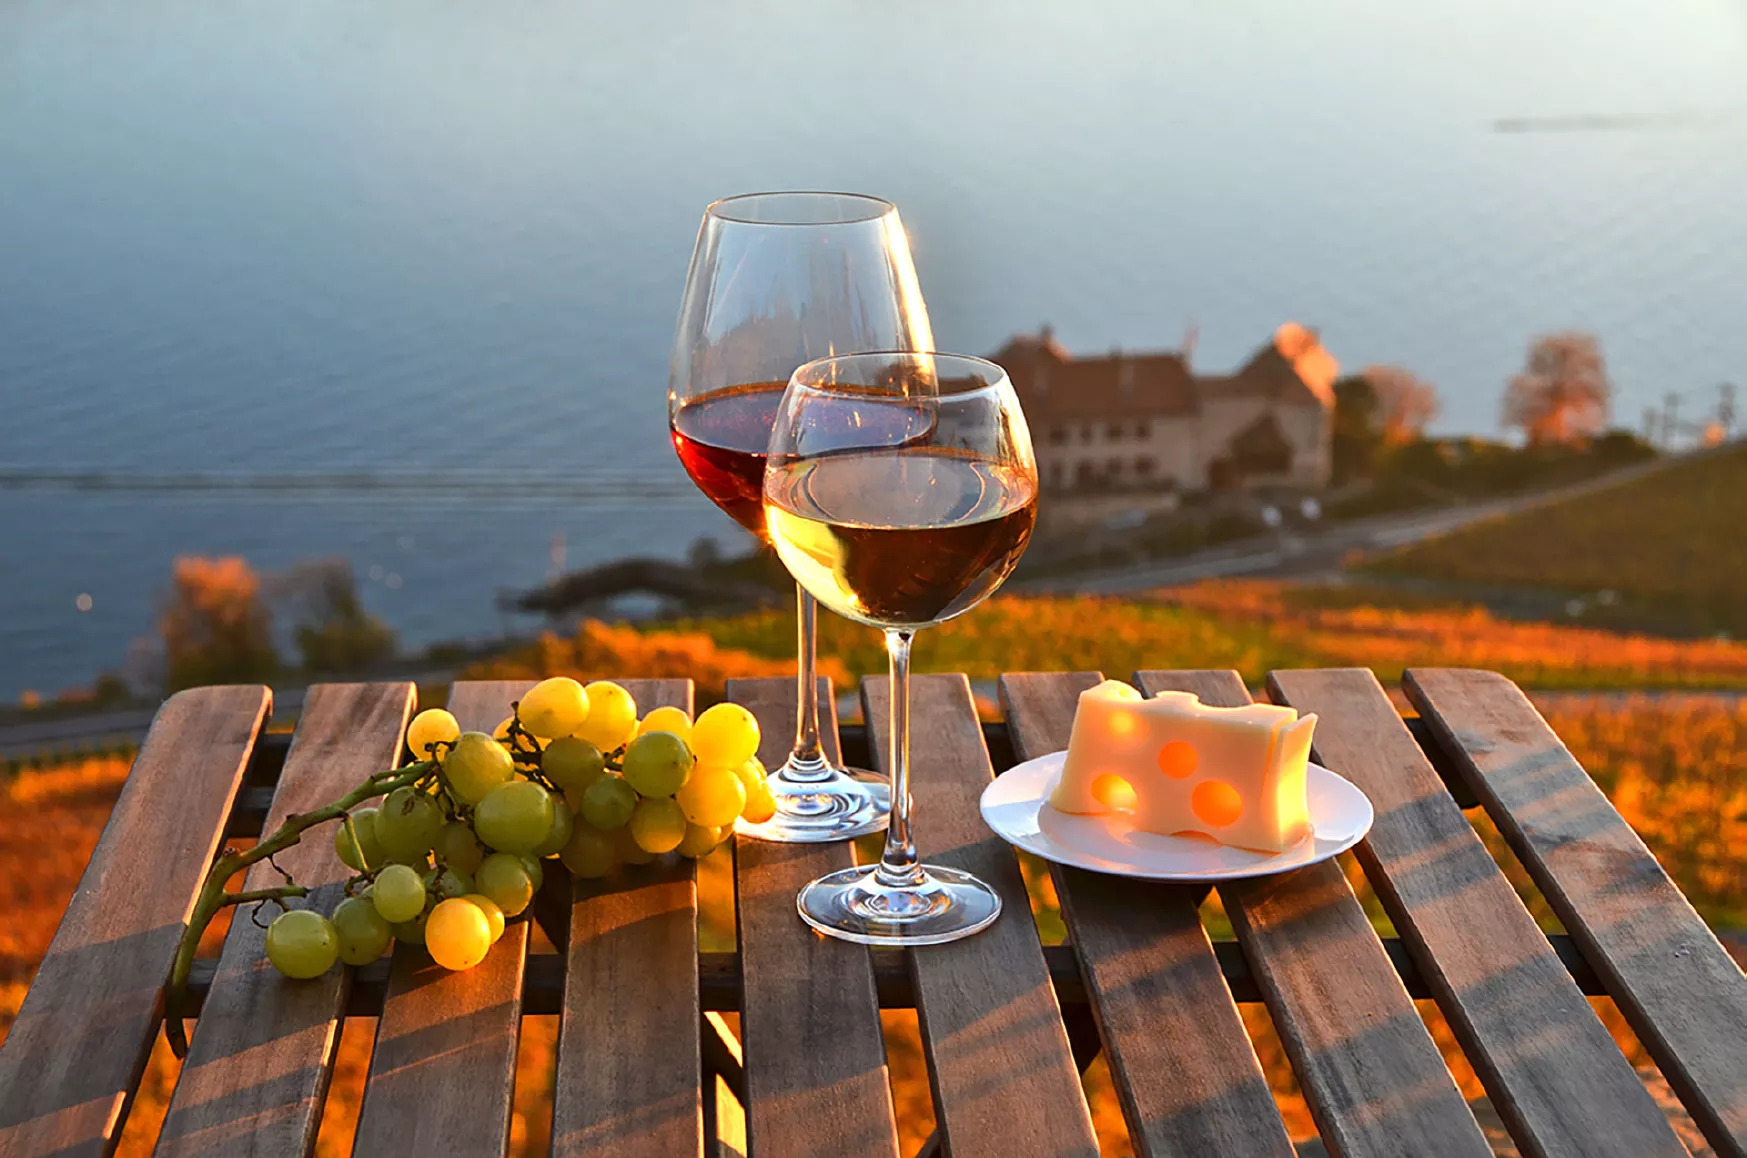 Lake-view-wine-tasting-in-Lavaux-Switzerland